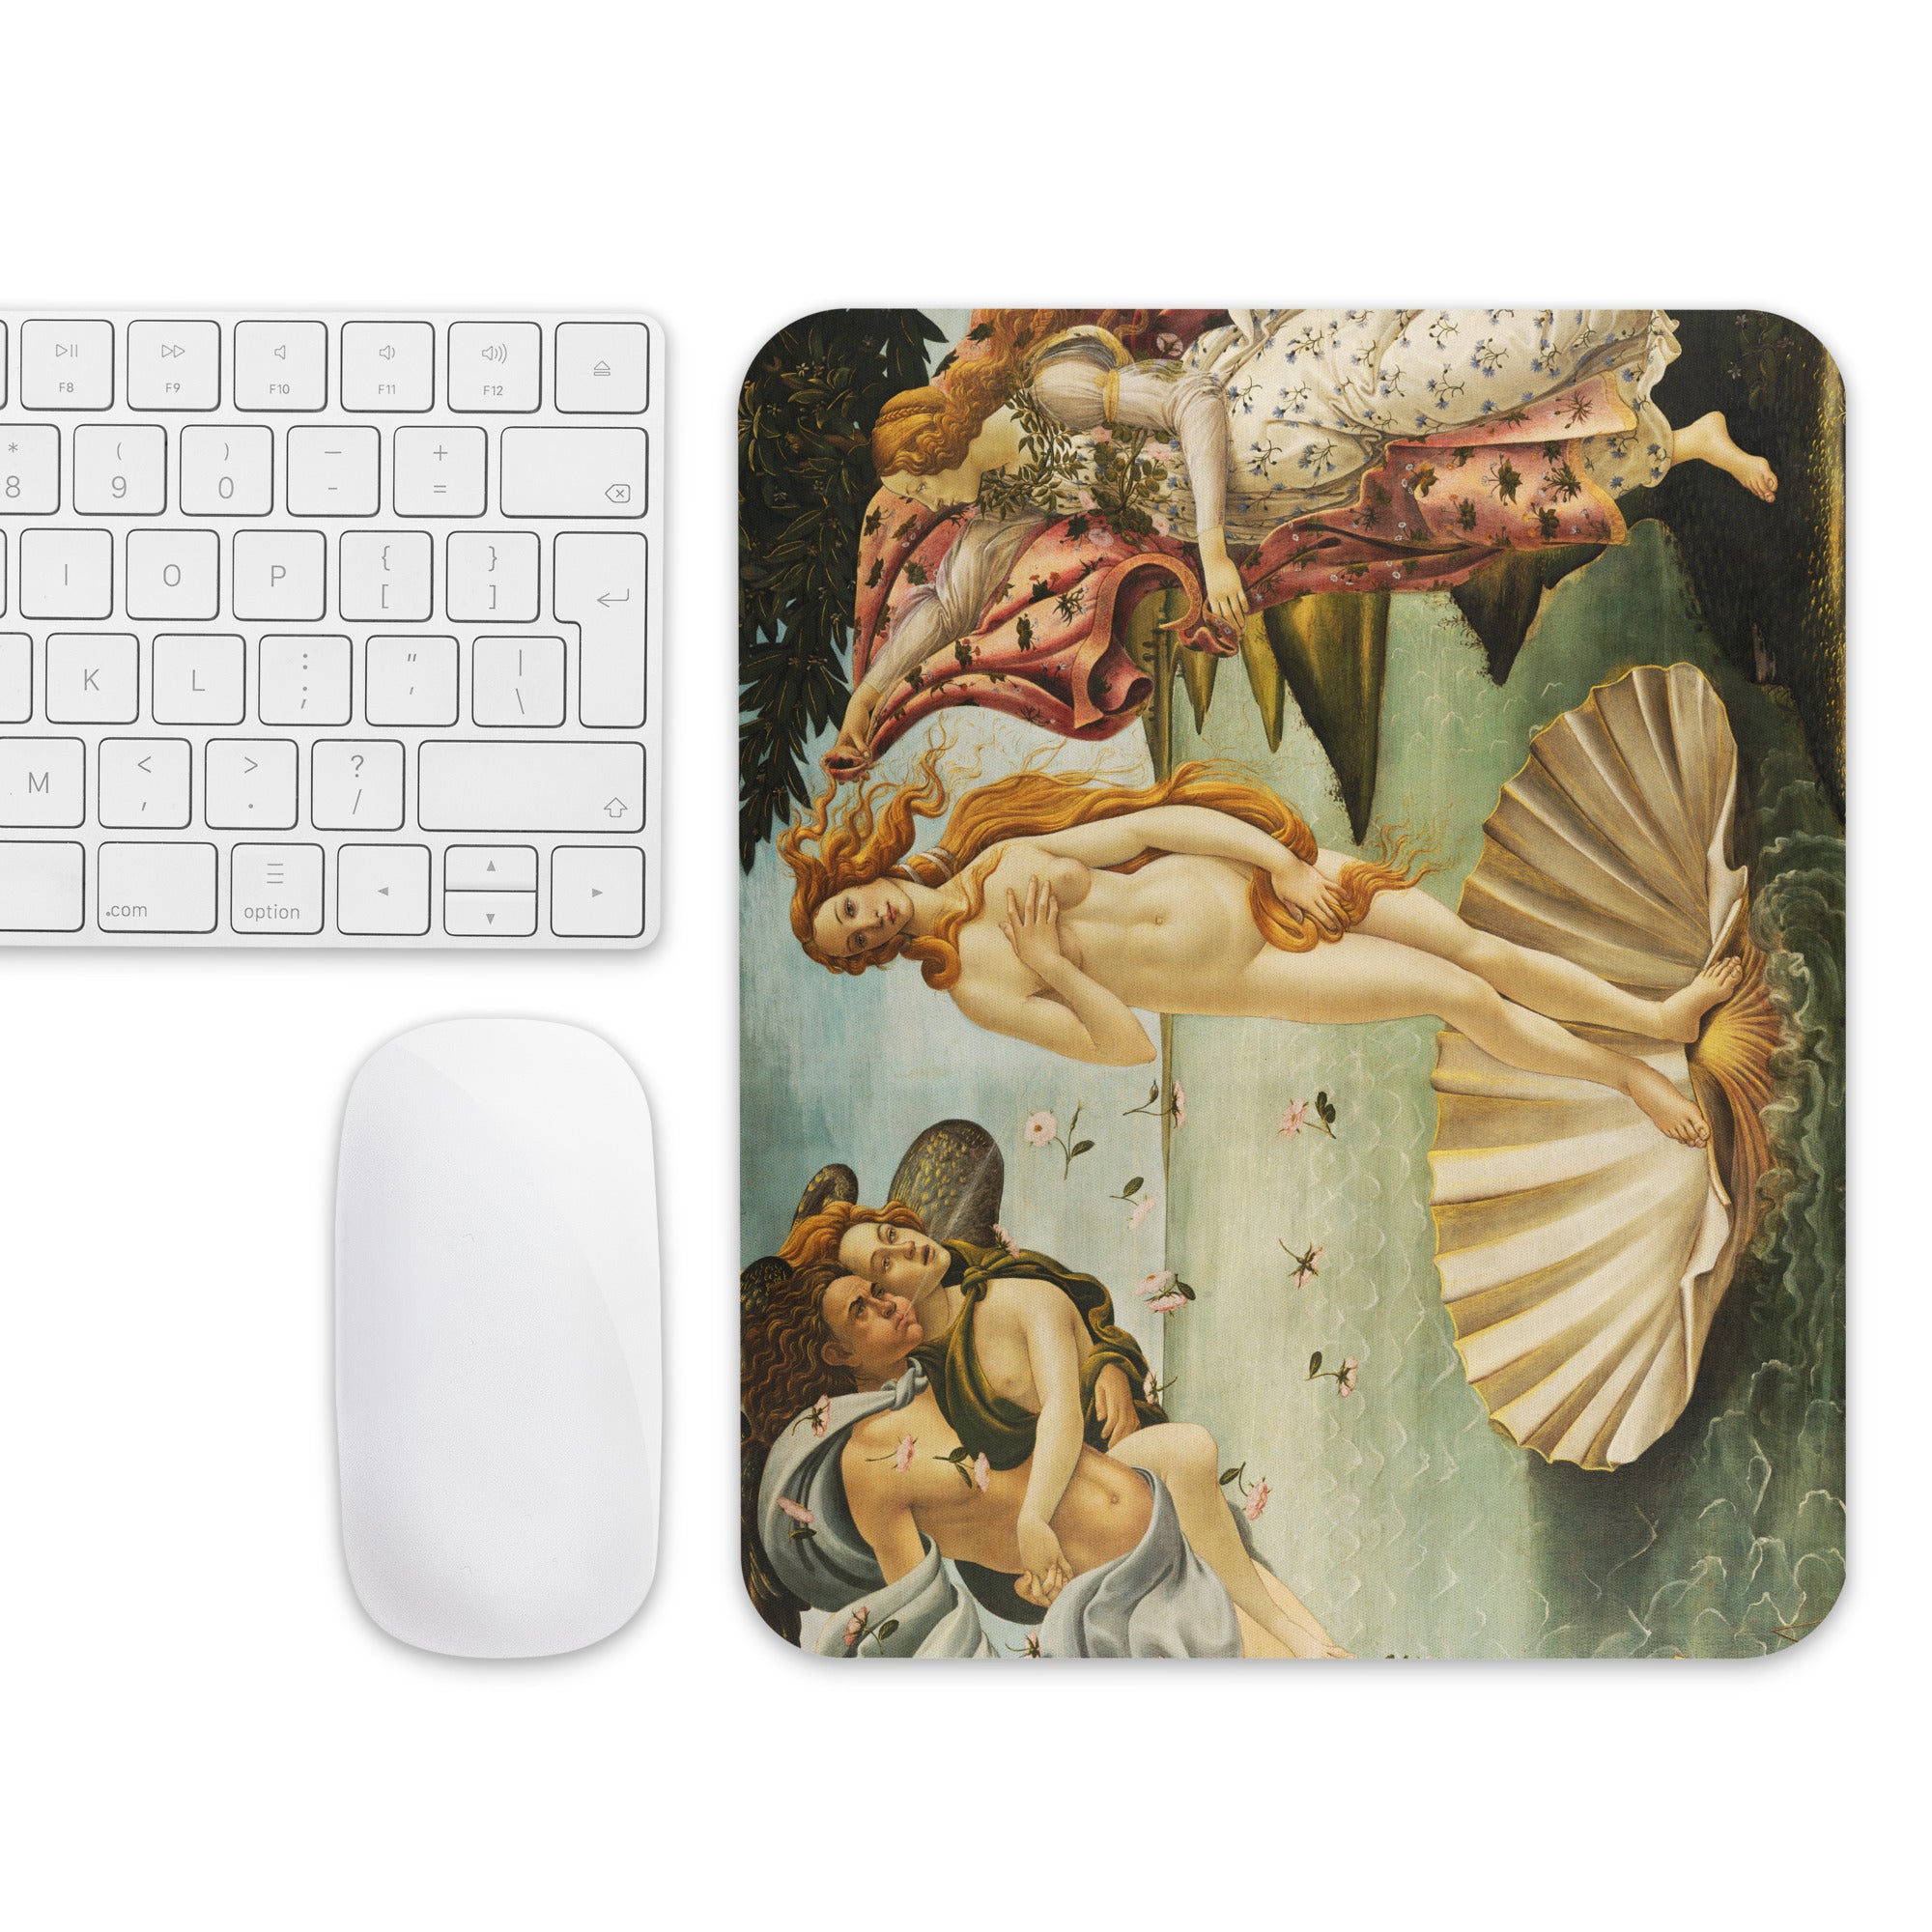 Sandro Botticelli 'The Birth of Venus' Famous Painting Mouse Pad | Premium Art Mouse Pad